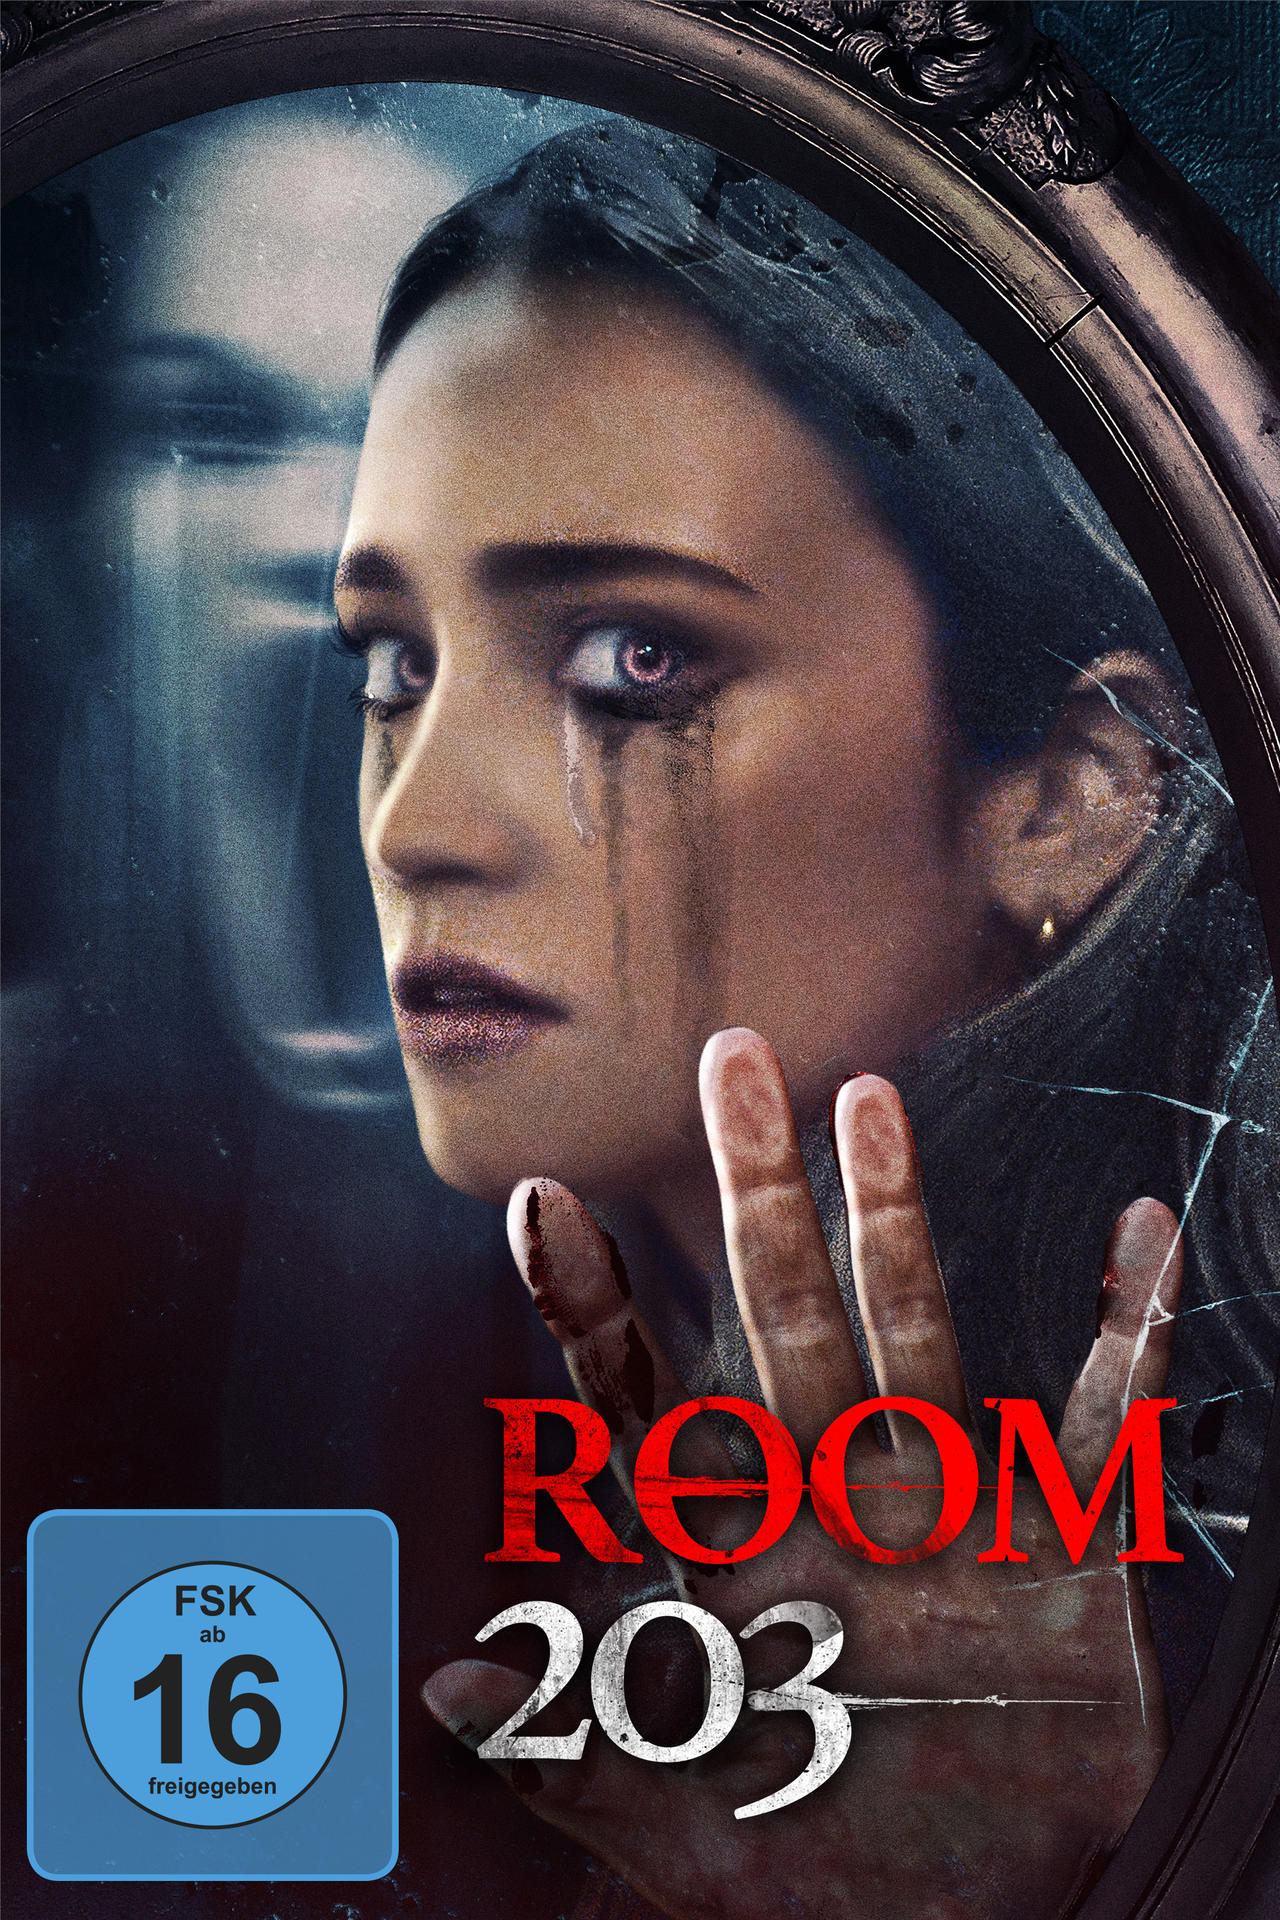 DVD 203 Room